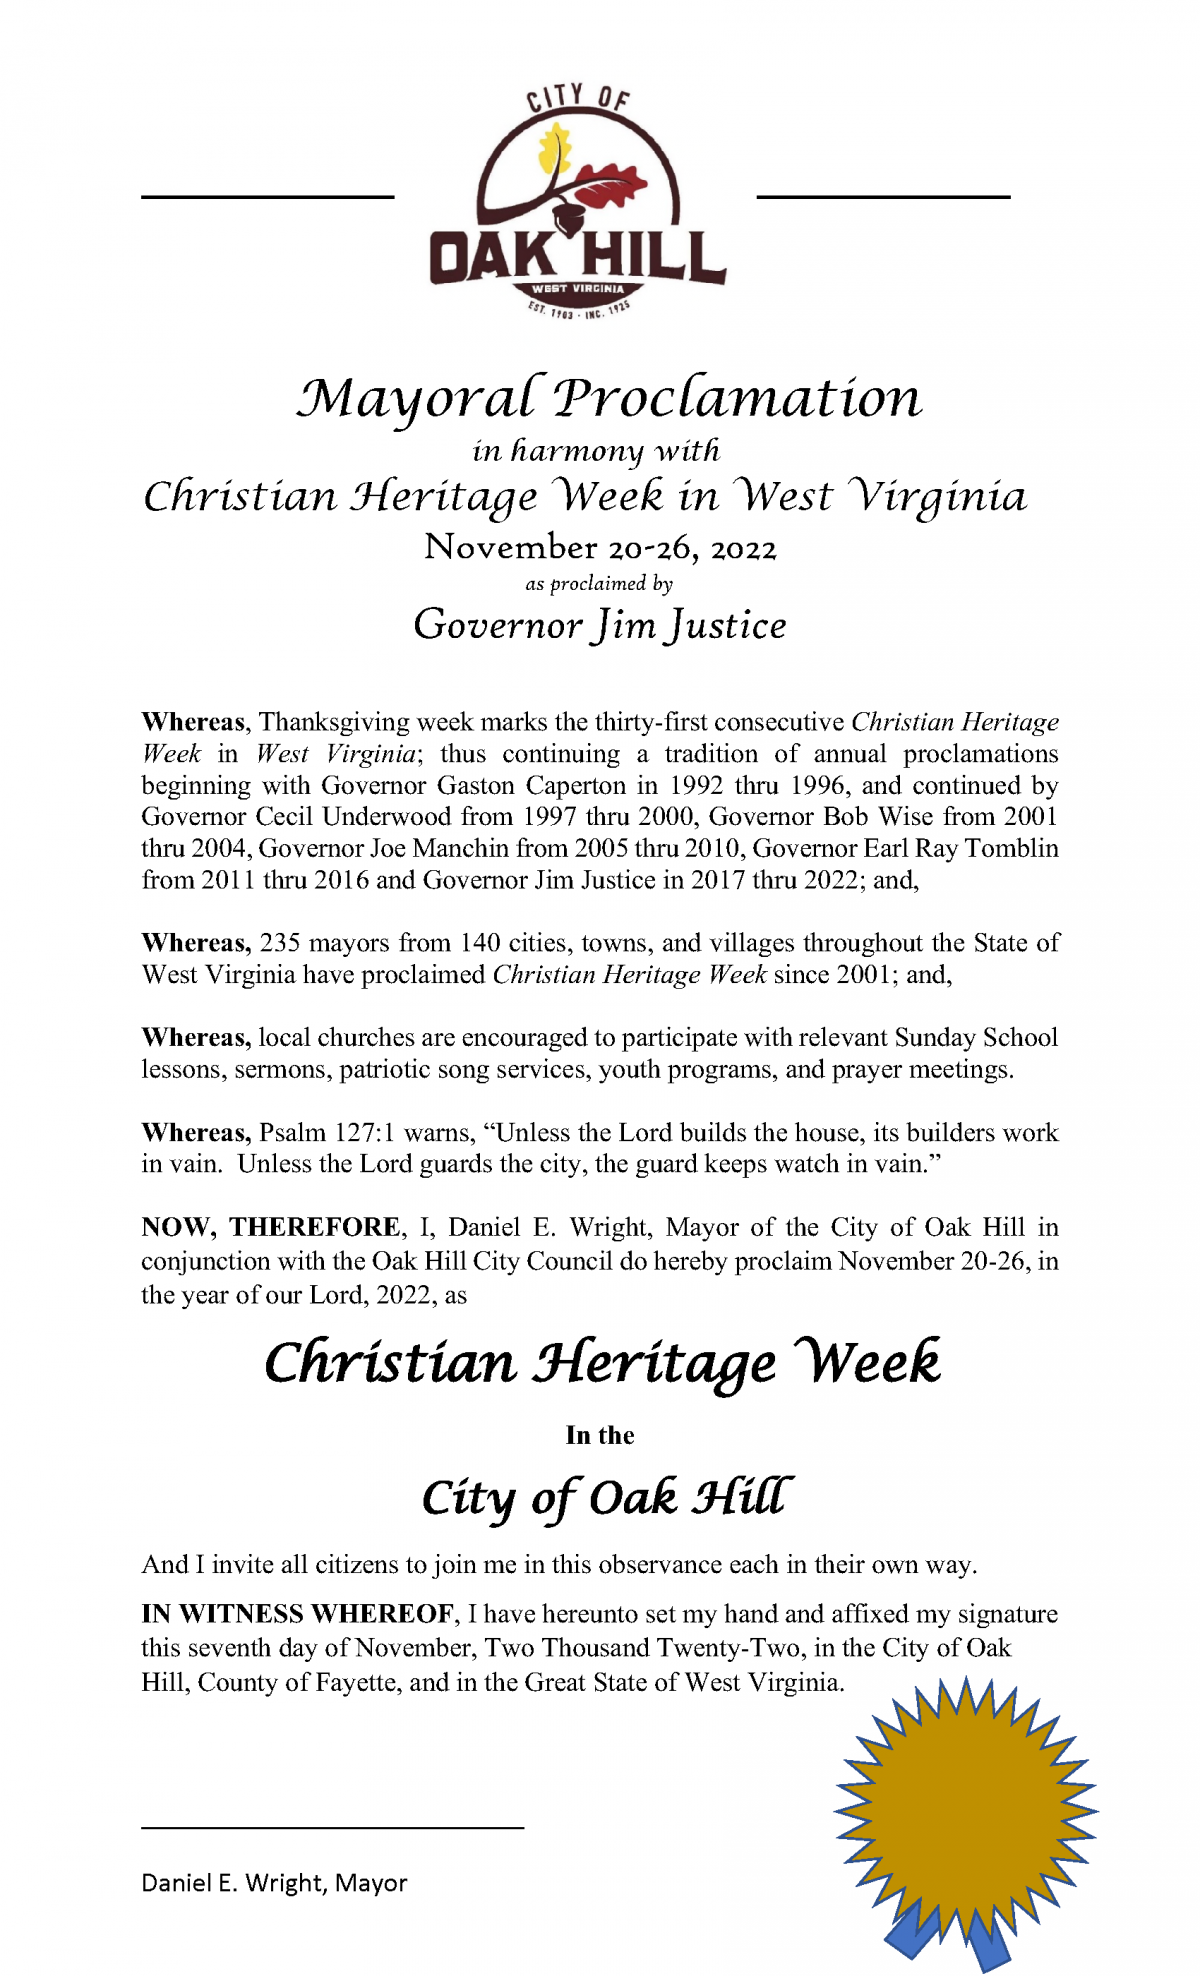 City of Oak Hill Celebrates Christian Heritage Week